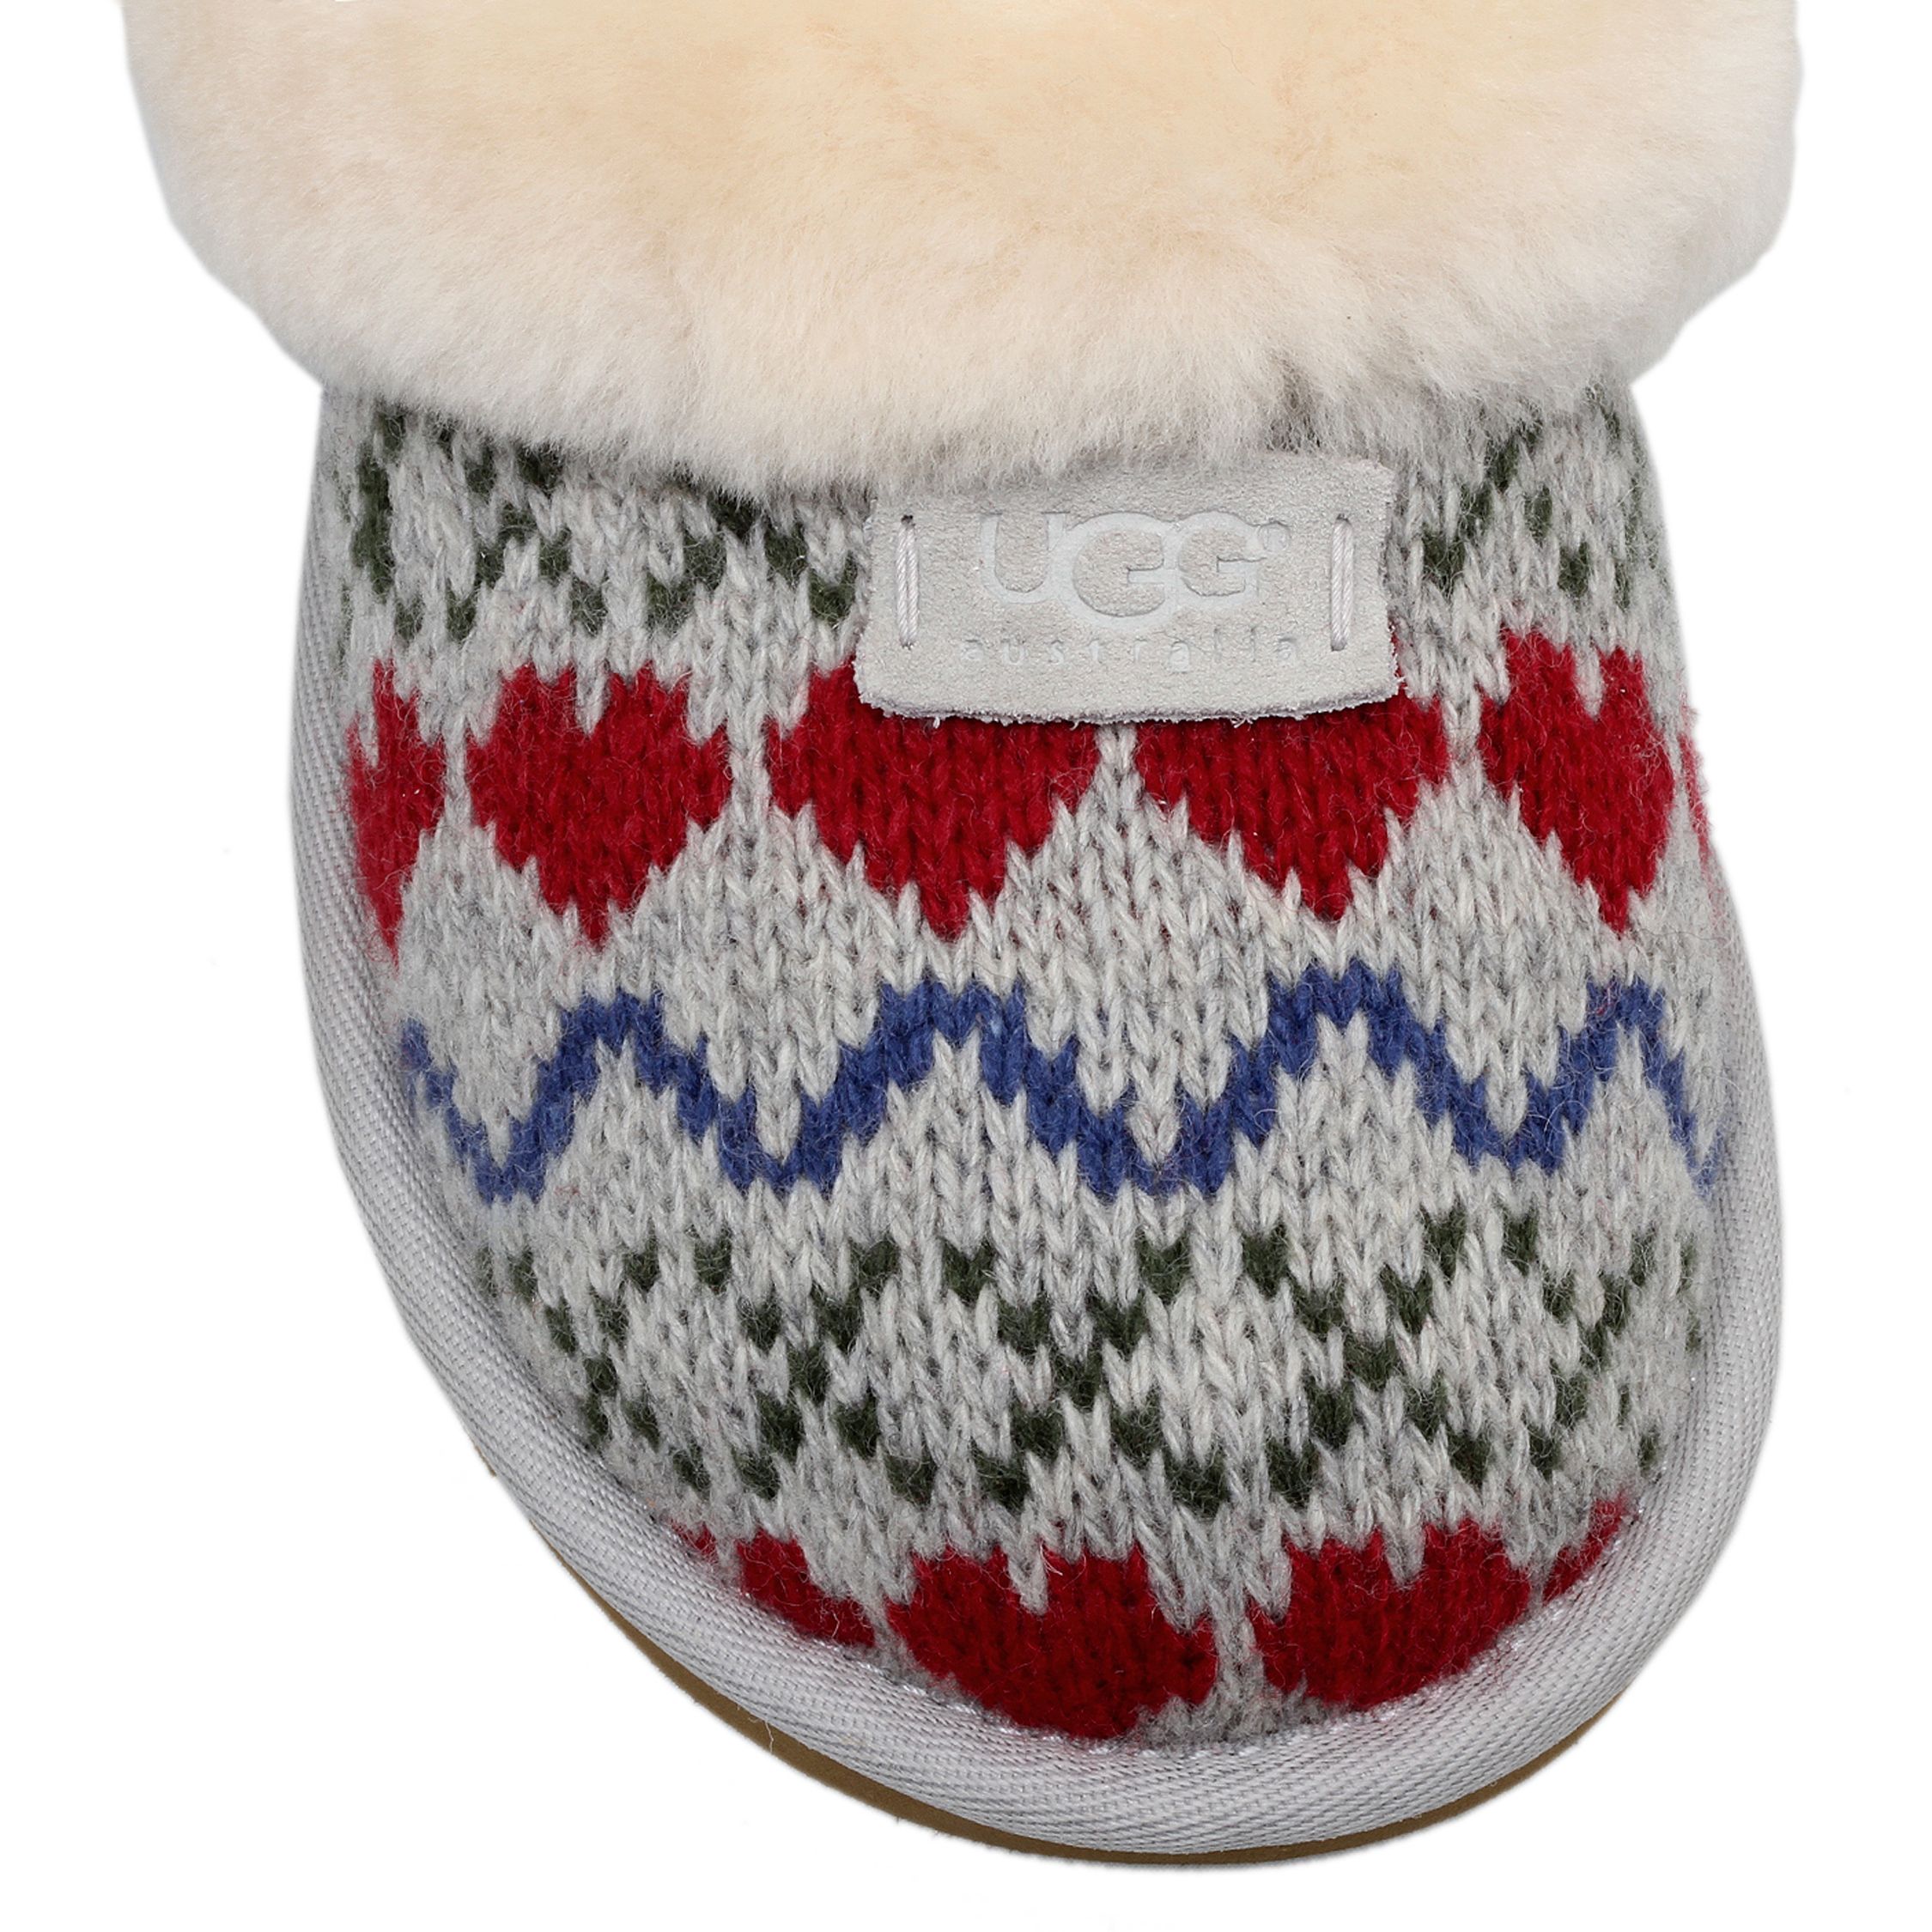 ugg cozy knit heart slippers uk